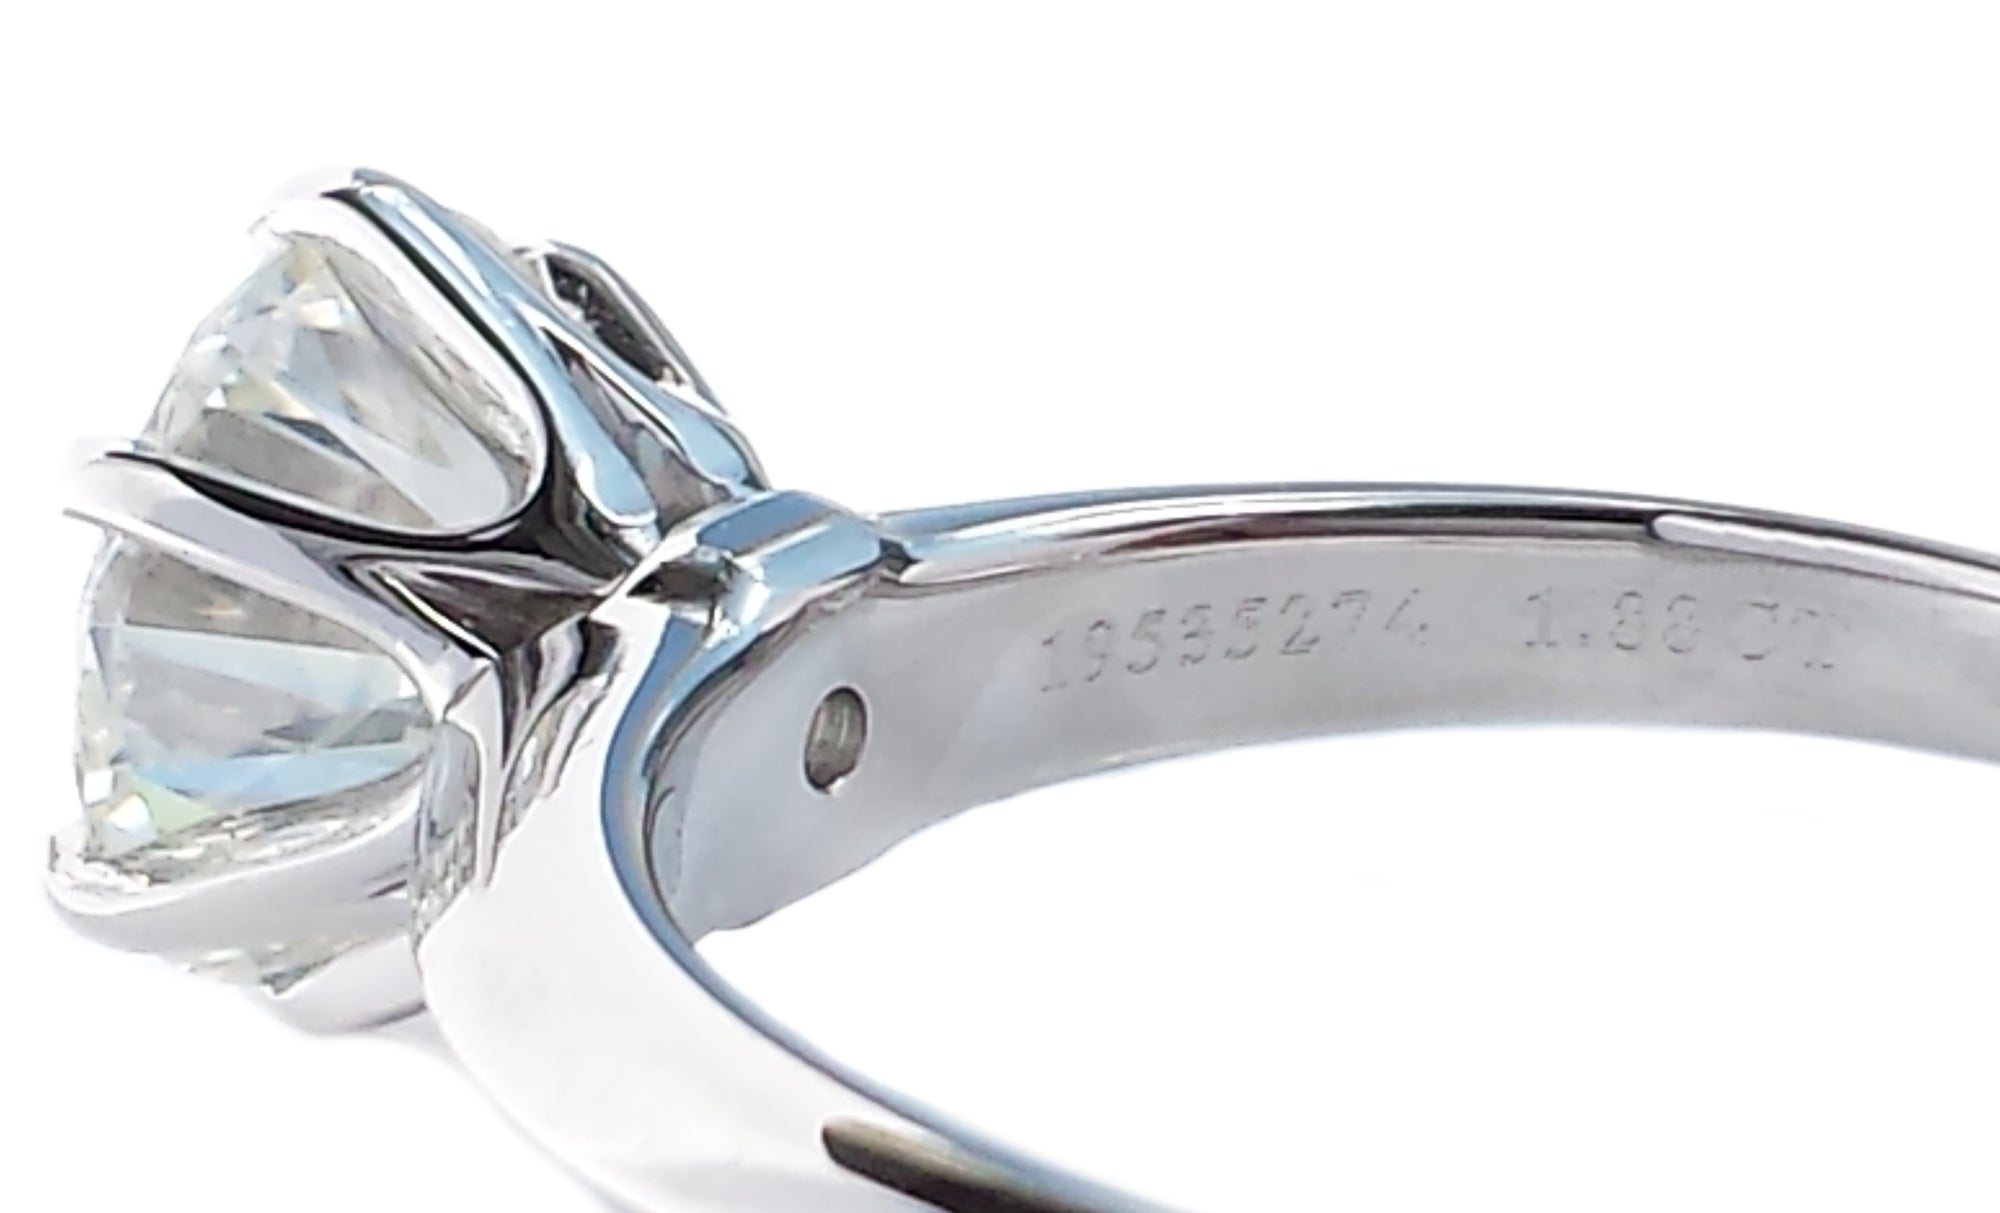 Tiffany & Co. 1.88ct I/VS2 Round Brilliant Cut Diamond Engagement Ring